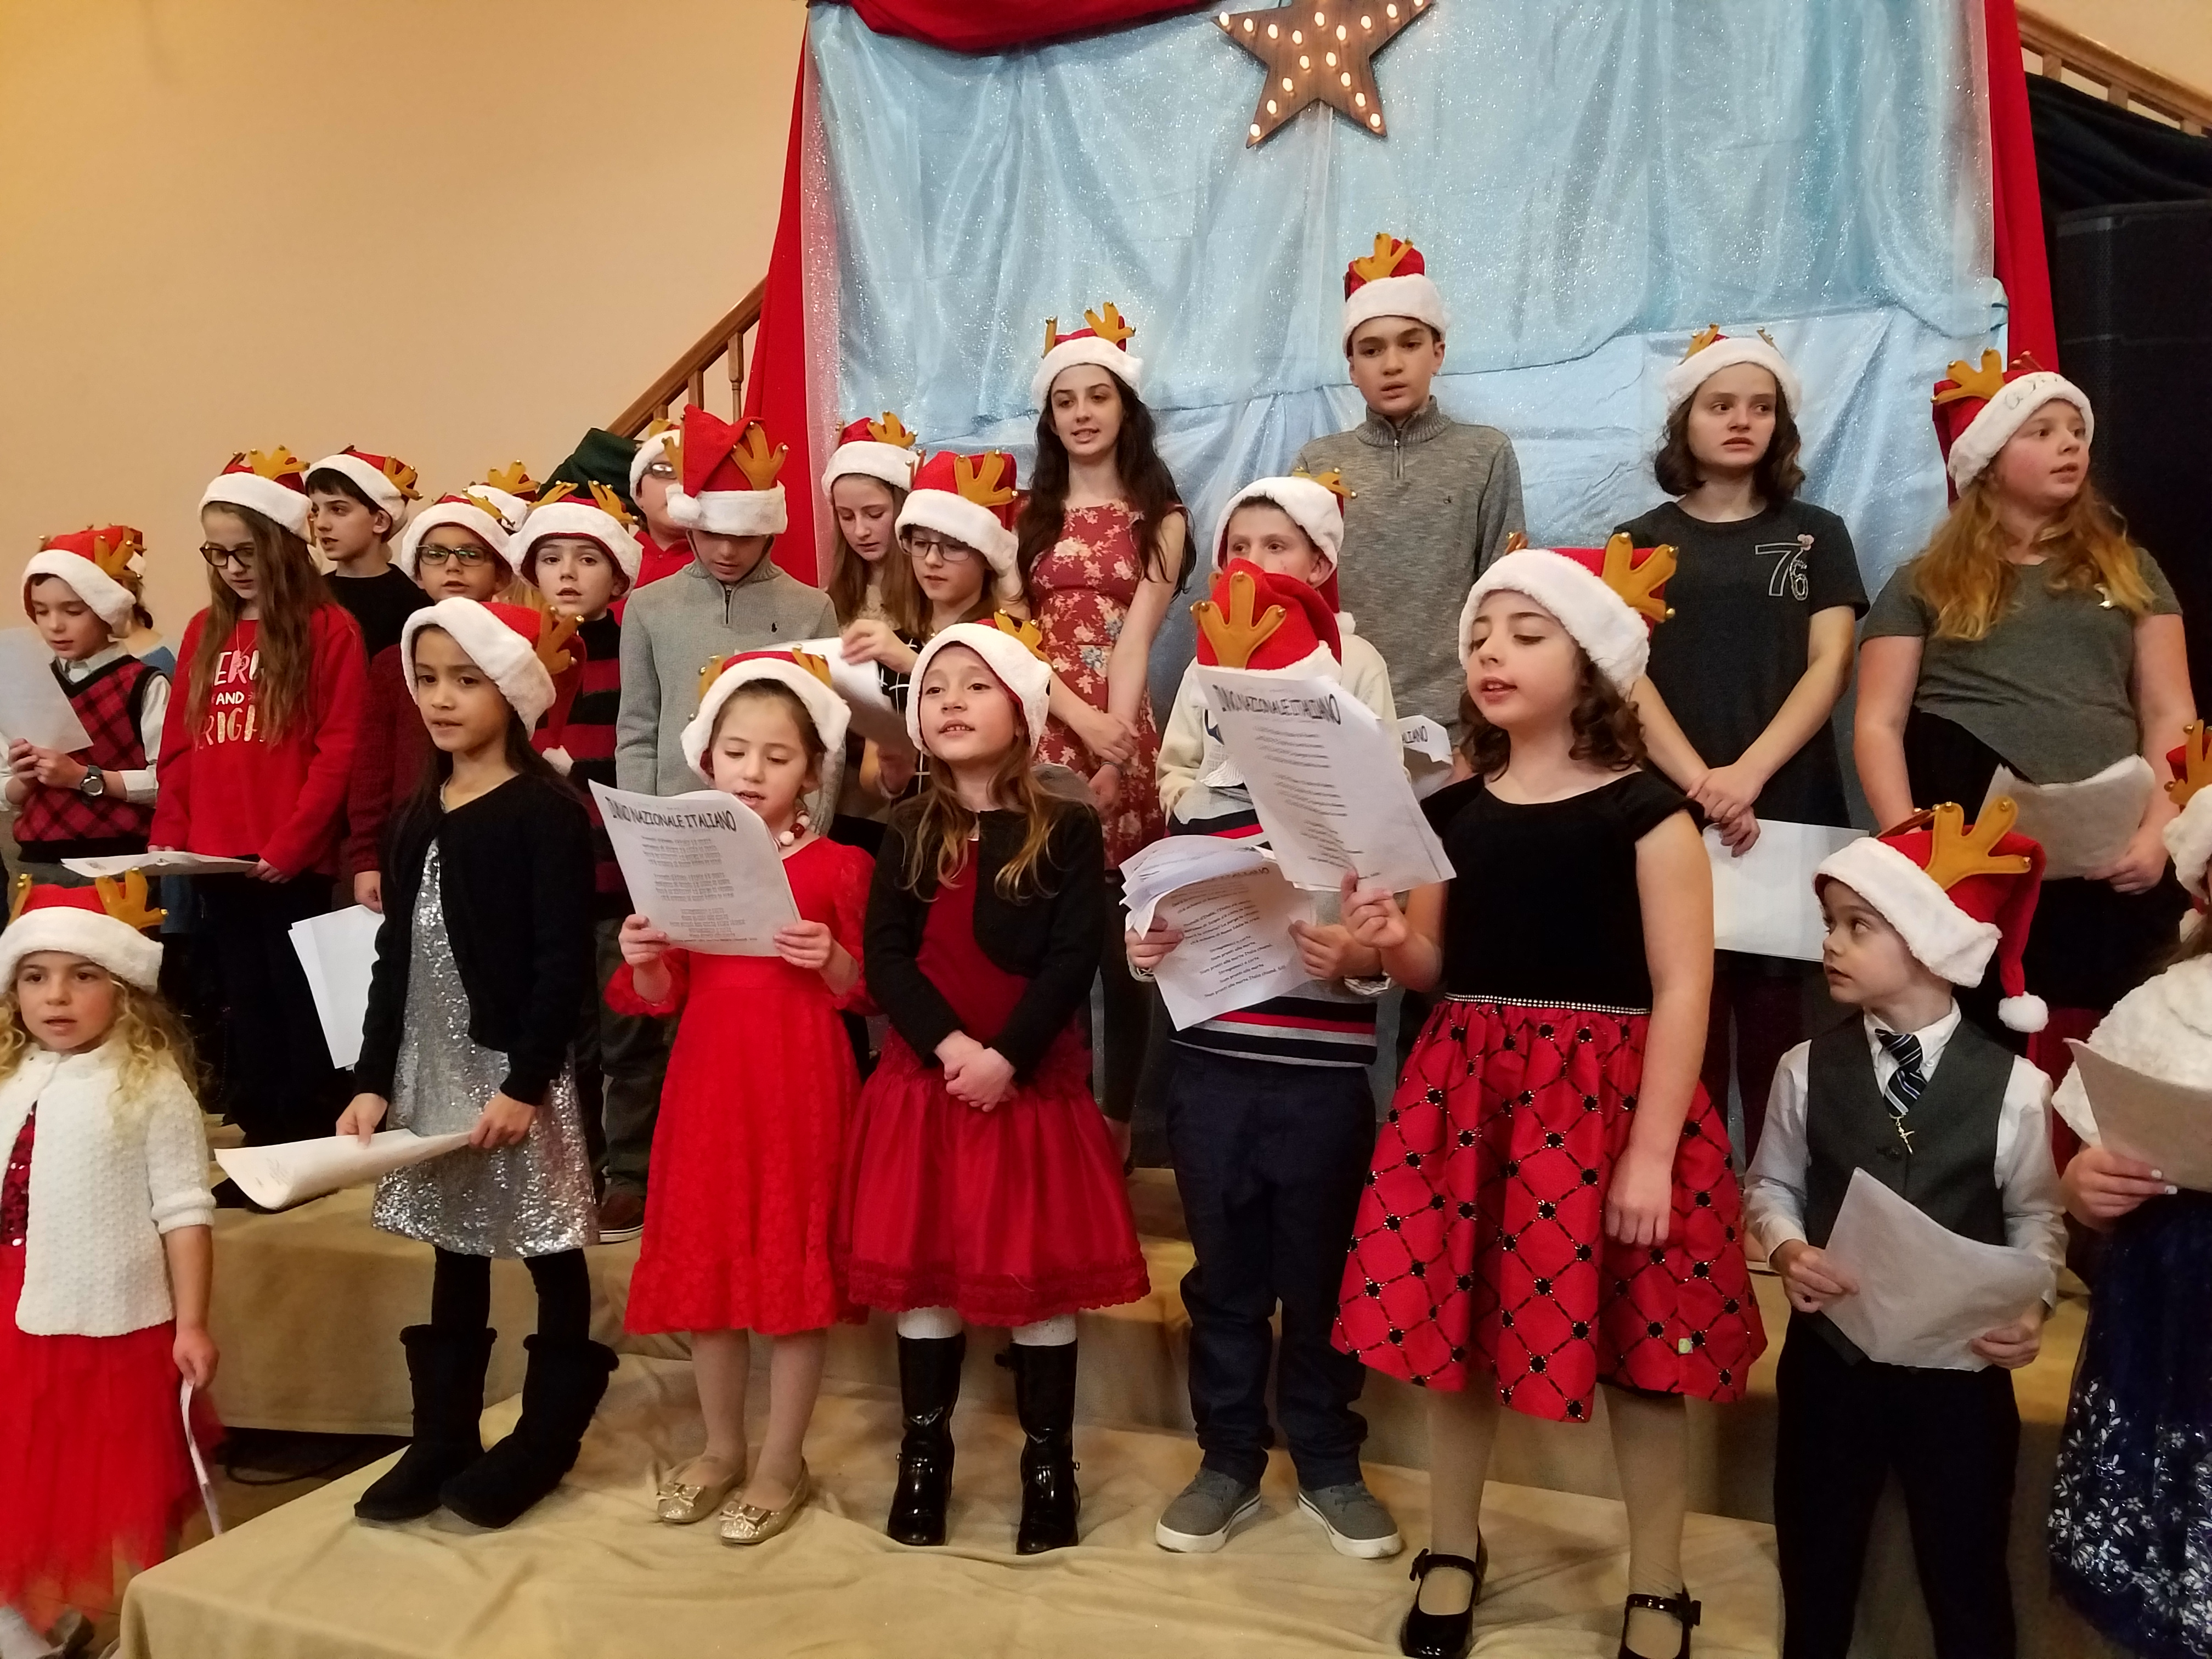 Italian Language Program Christmas Celebration Photos - December 17, 2017 (16) - Casa Italia Chicago